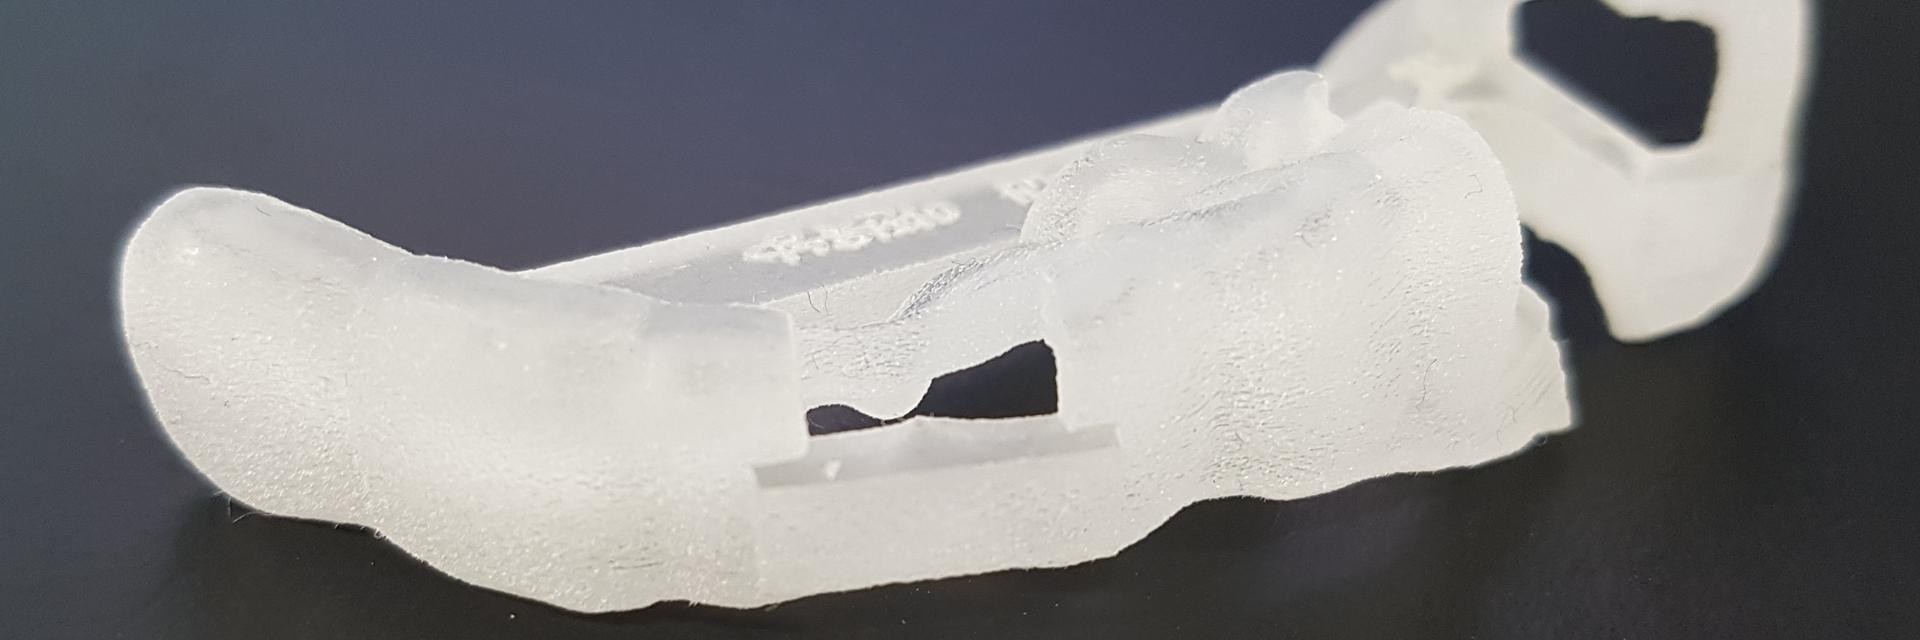 3D-printed dental implant